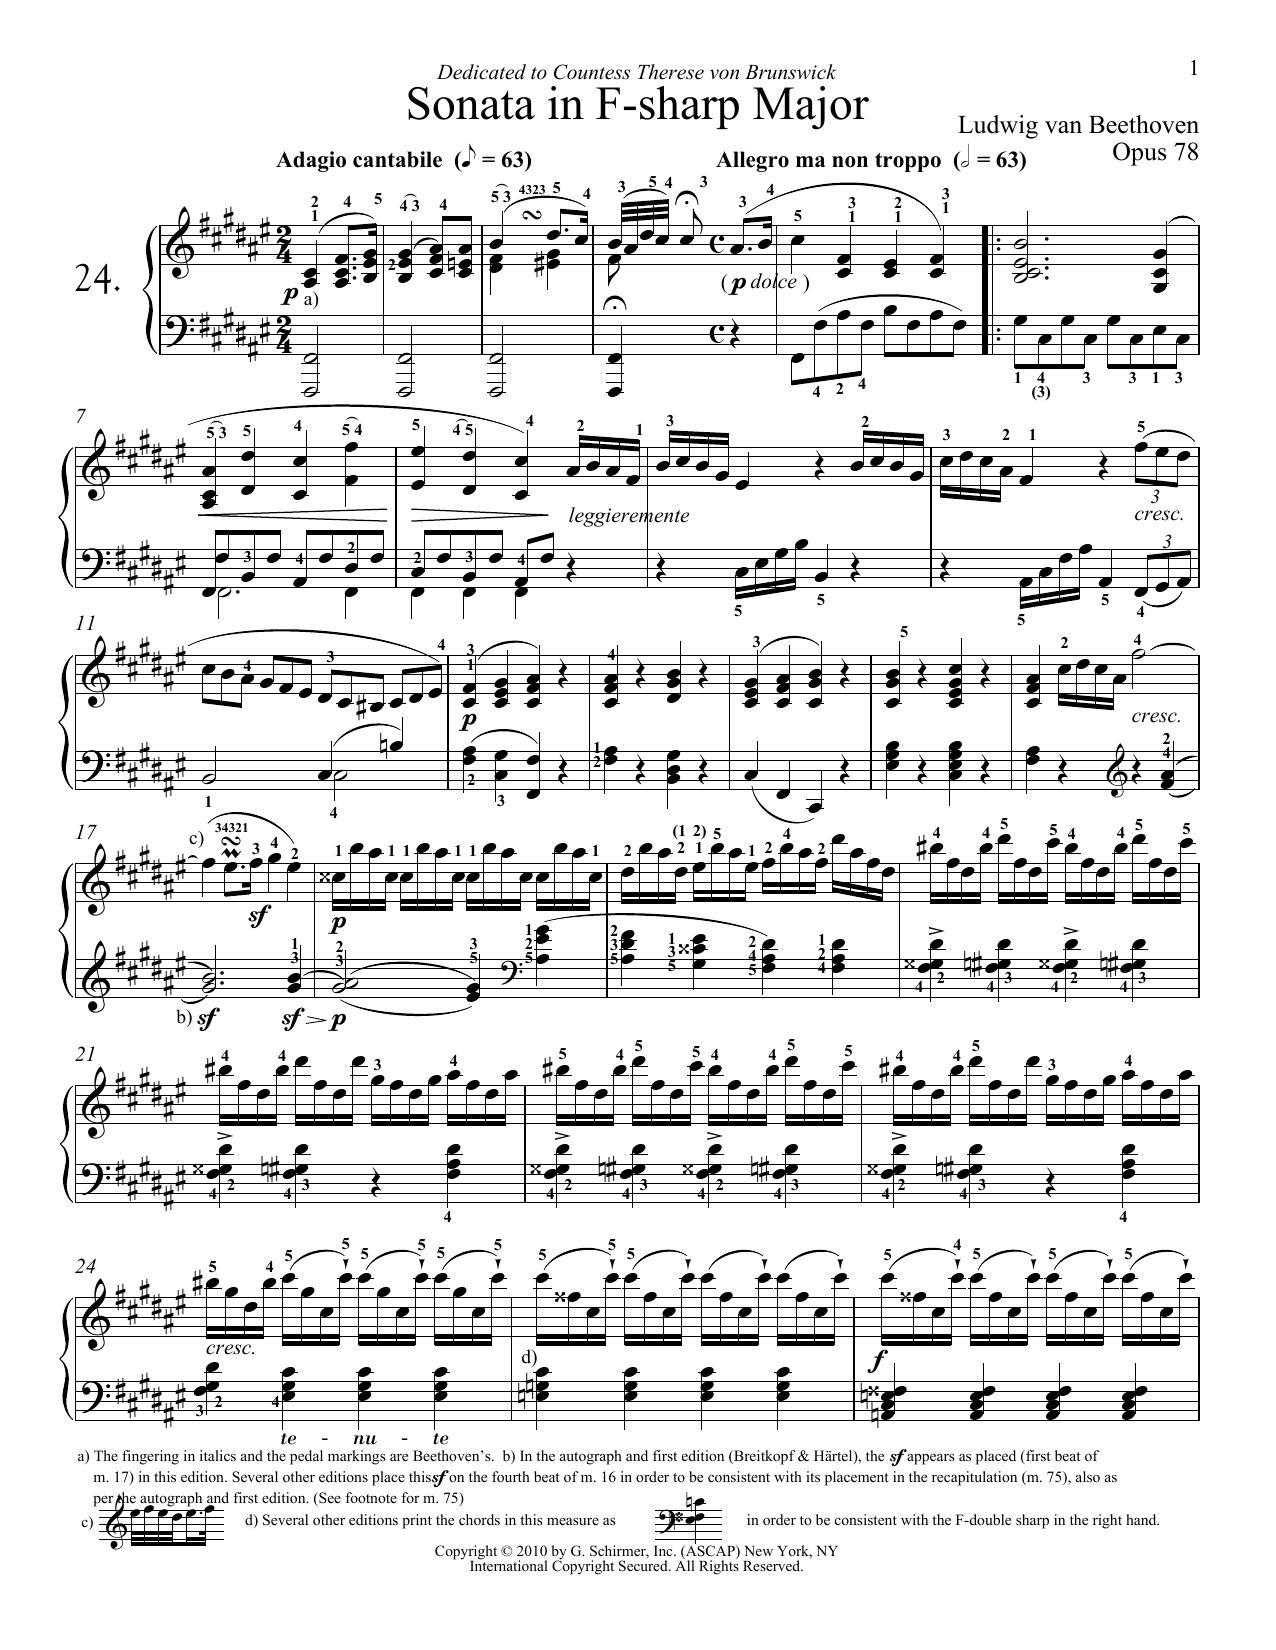 Ludwig van Beethoven Piano Sonata No. 24 In F-Sharp Major, Op. 78 Sheet Music Notes & Chords for Piano - Download or Print PDF